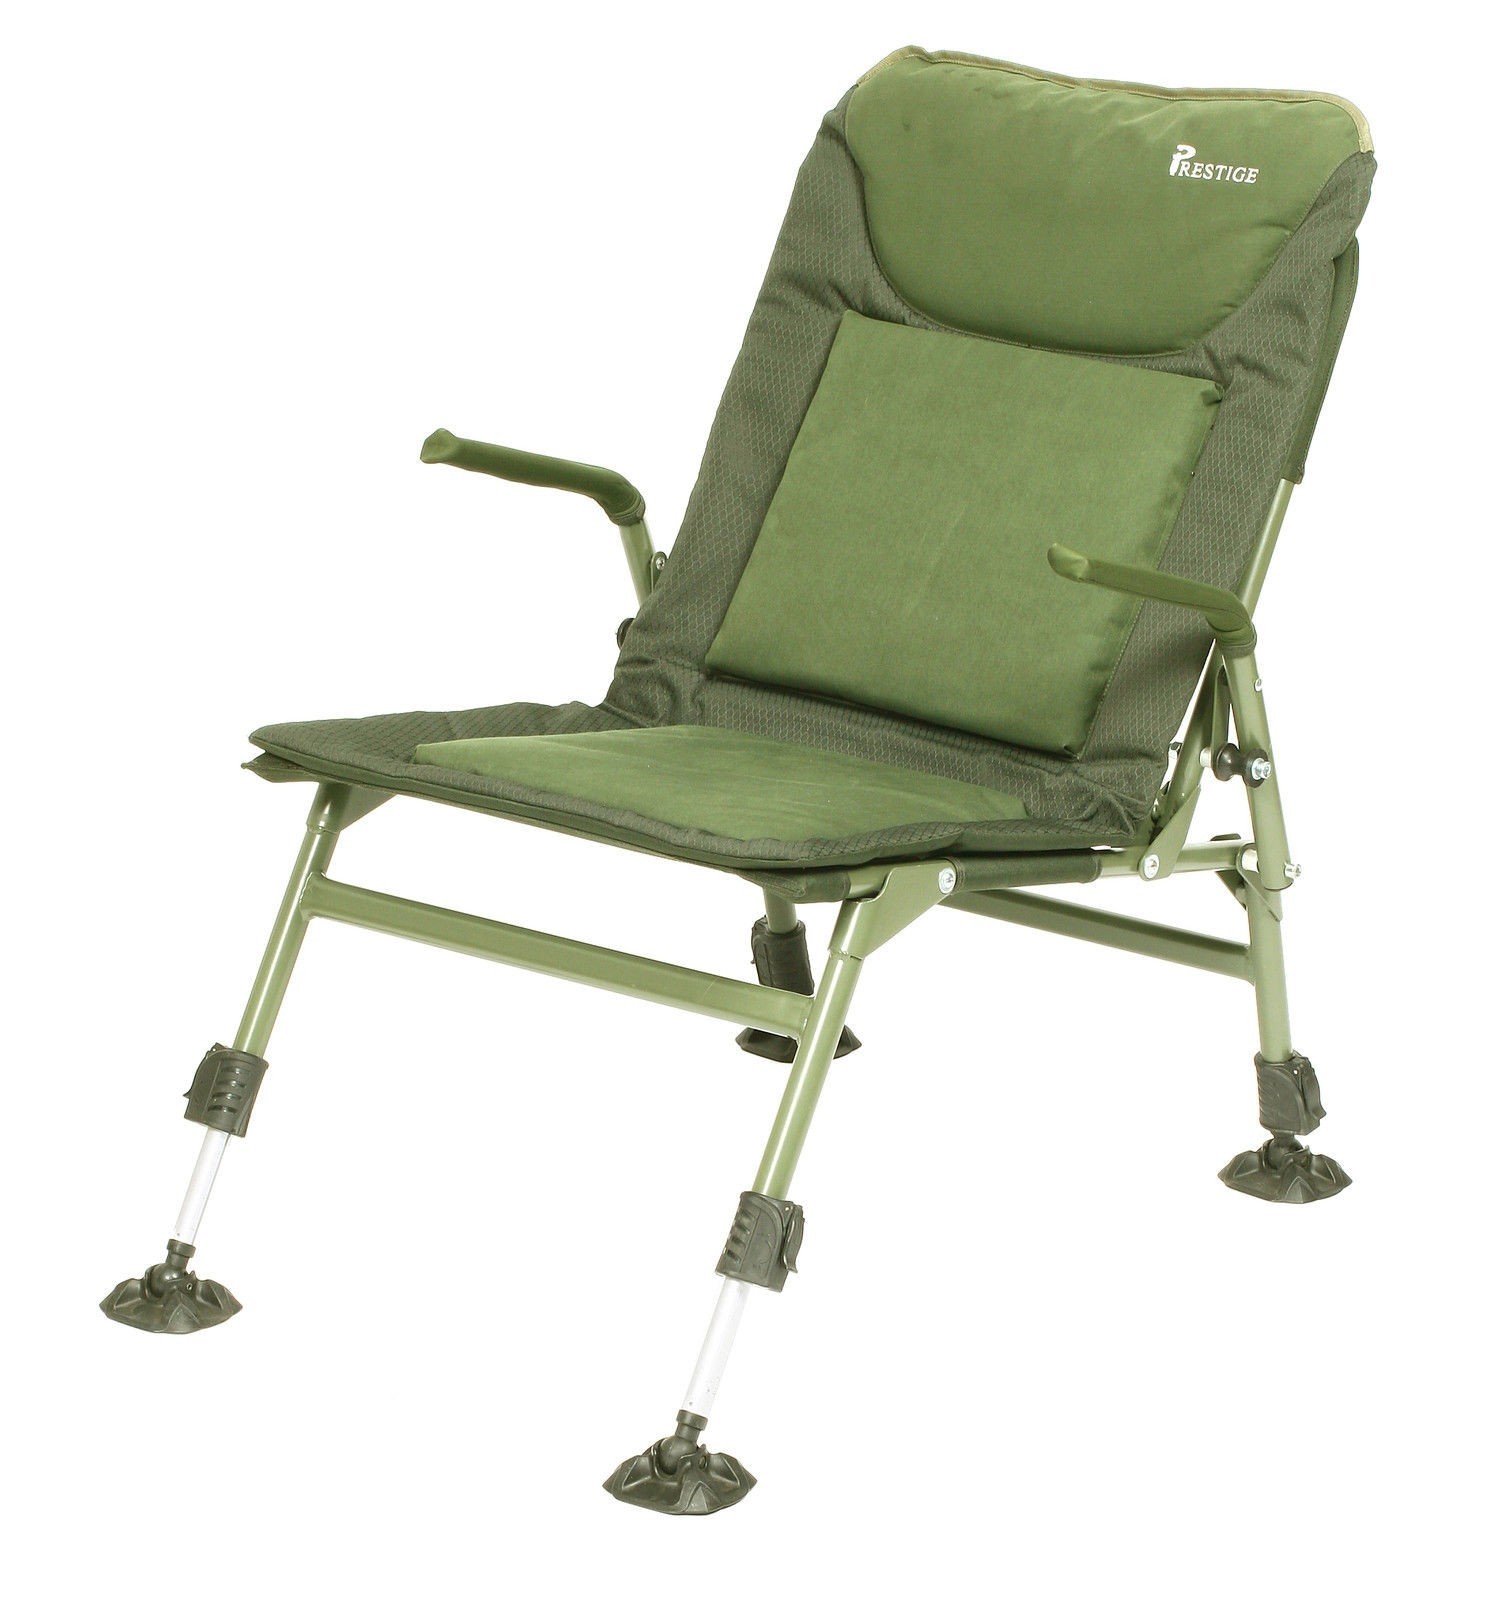 Prestige lightweight folding arm chair